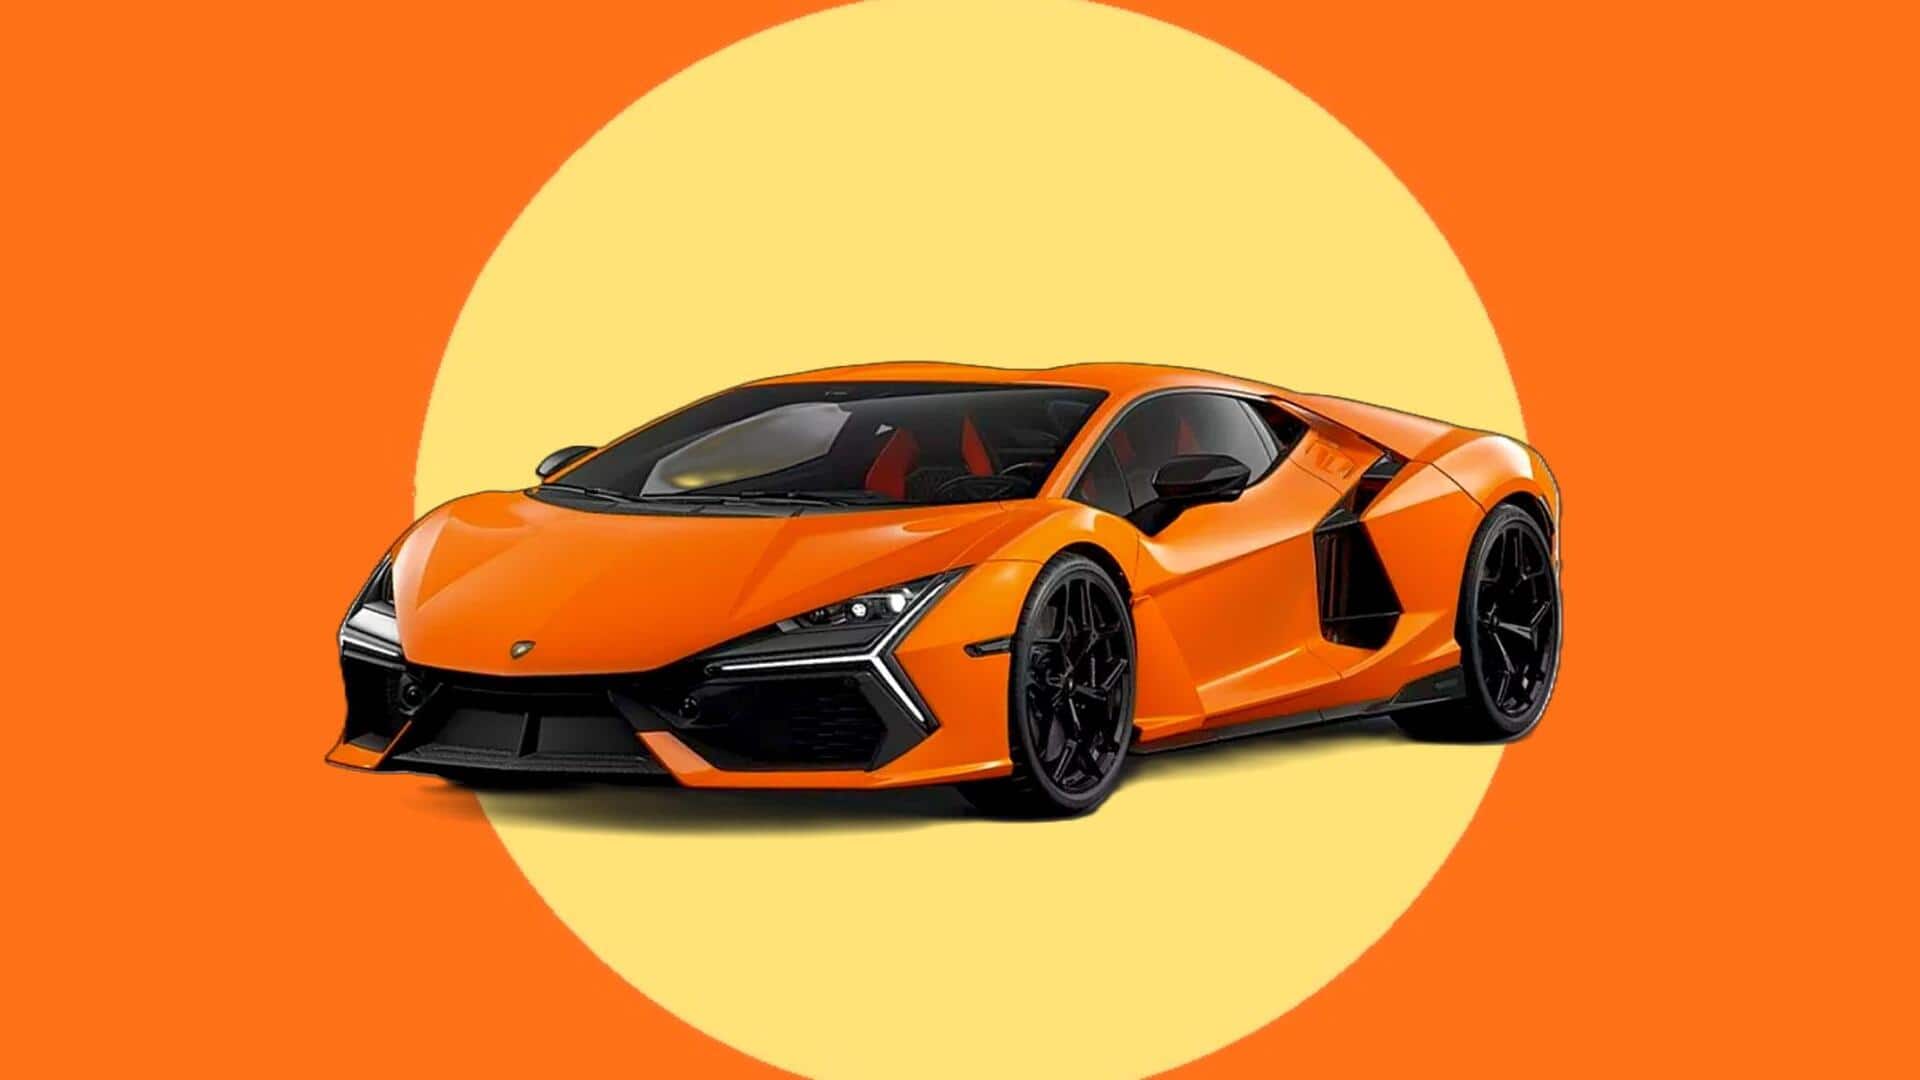 Lamborghini focusing on hybrid technology to prolong ICE powertrains